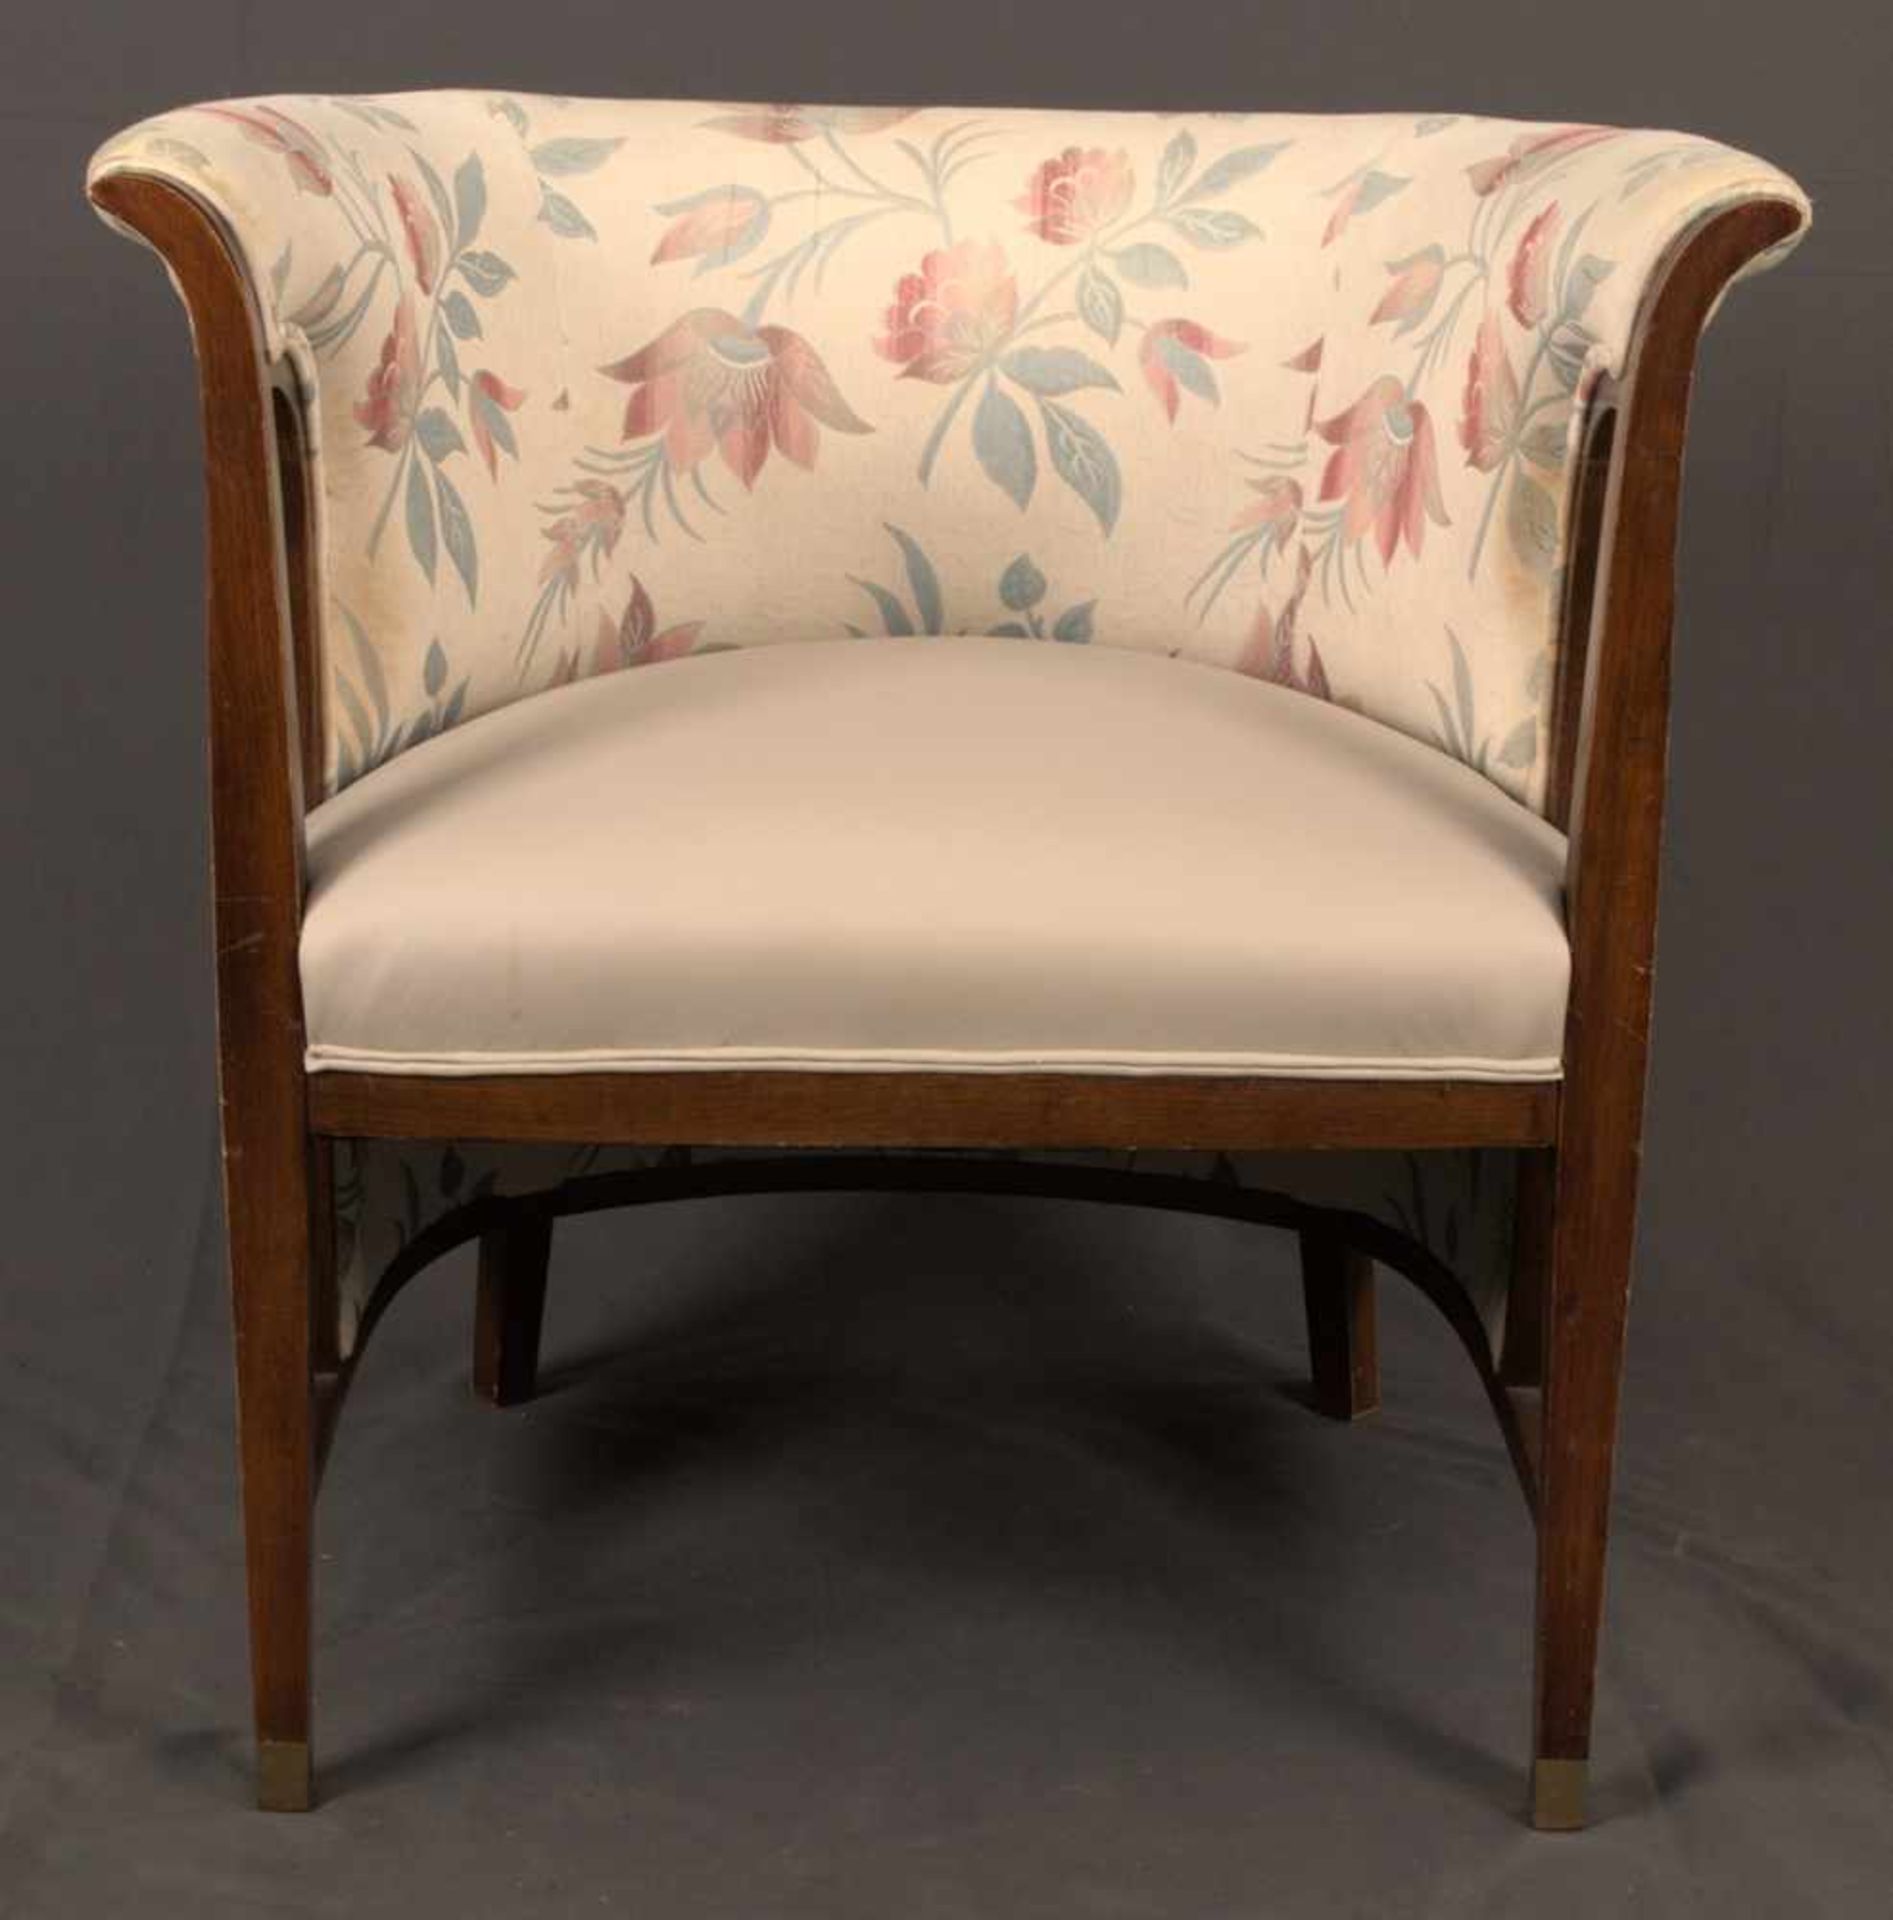 Wiener Polstersessel, hufeisenförmiges, gepolstertes Sesselgestell mit geraden, knatigen Beinen (die - Image 17 of 19